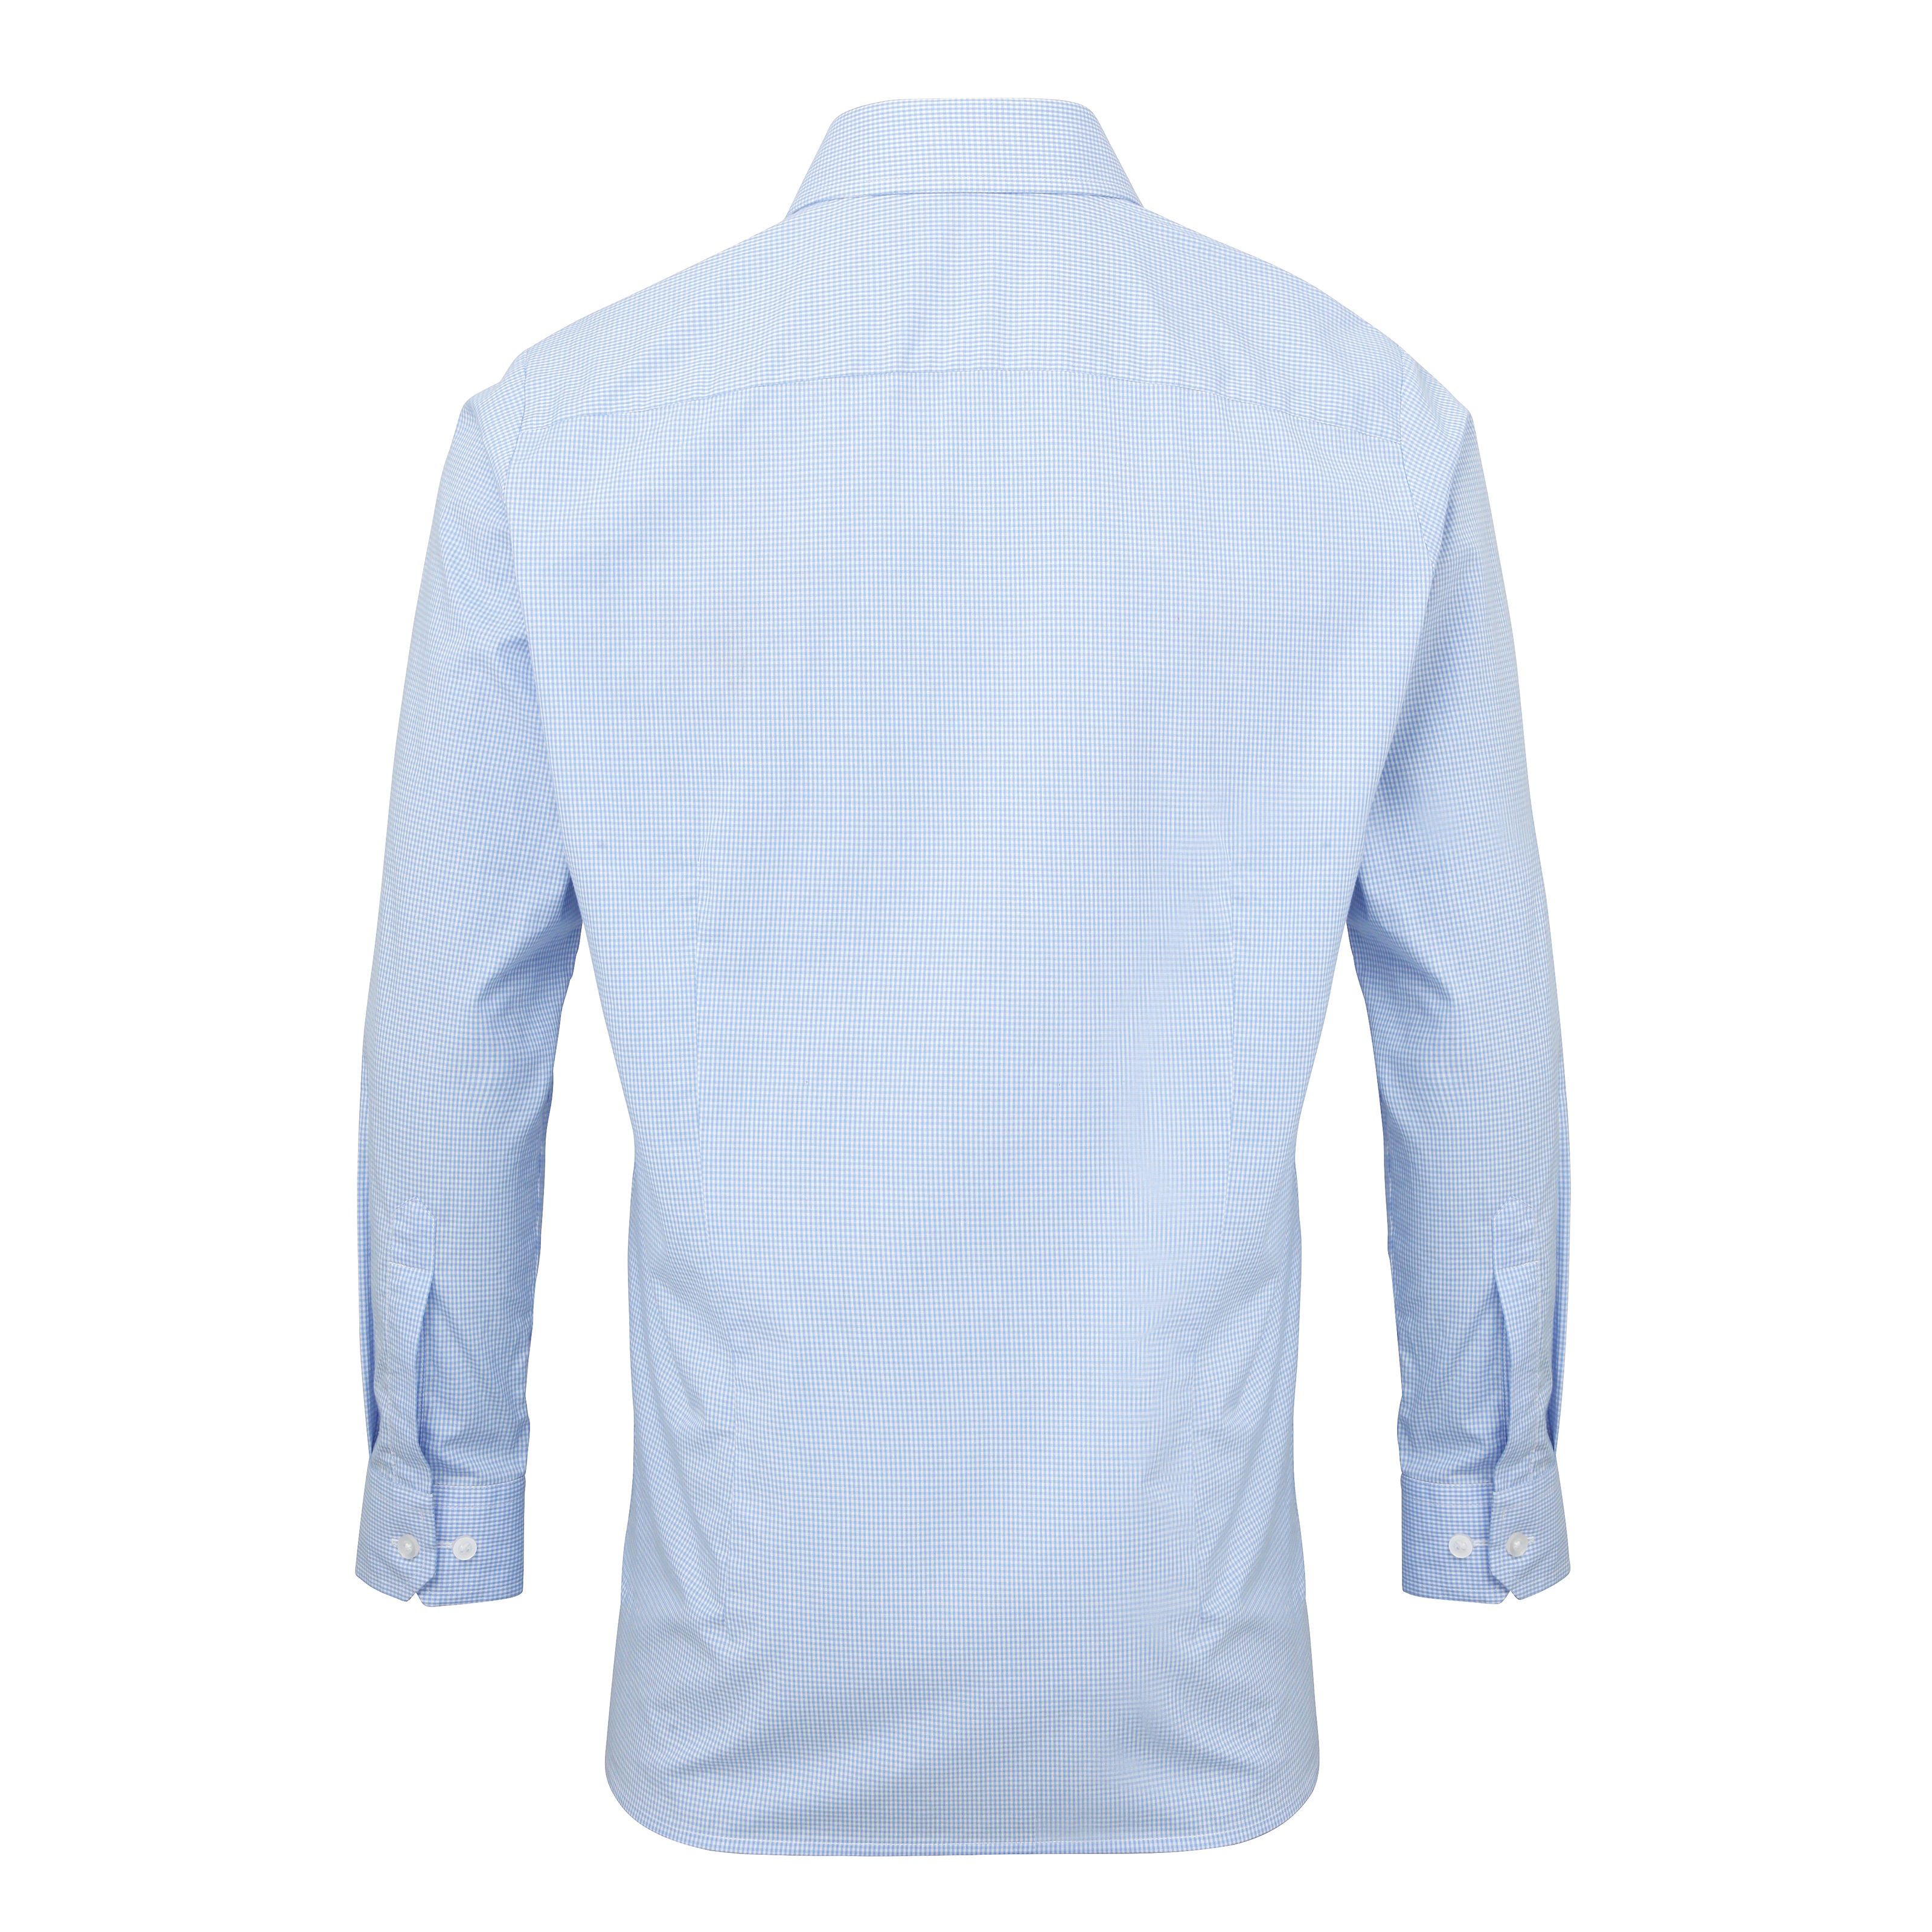 Business Casual Long Sleeve Blue Shirt for Men